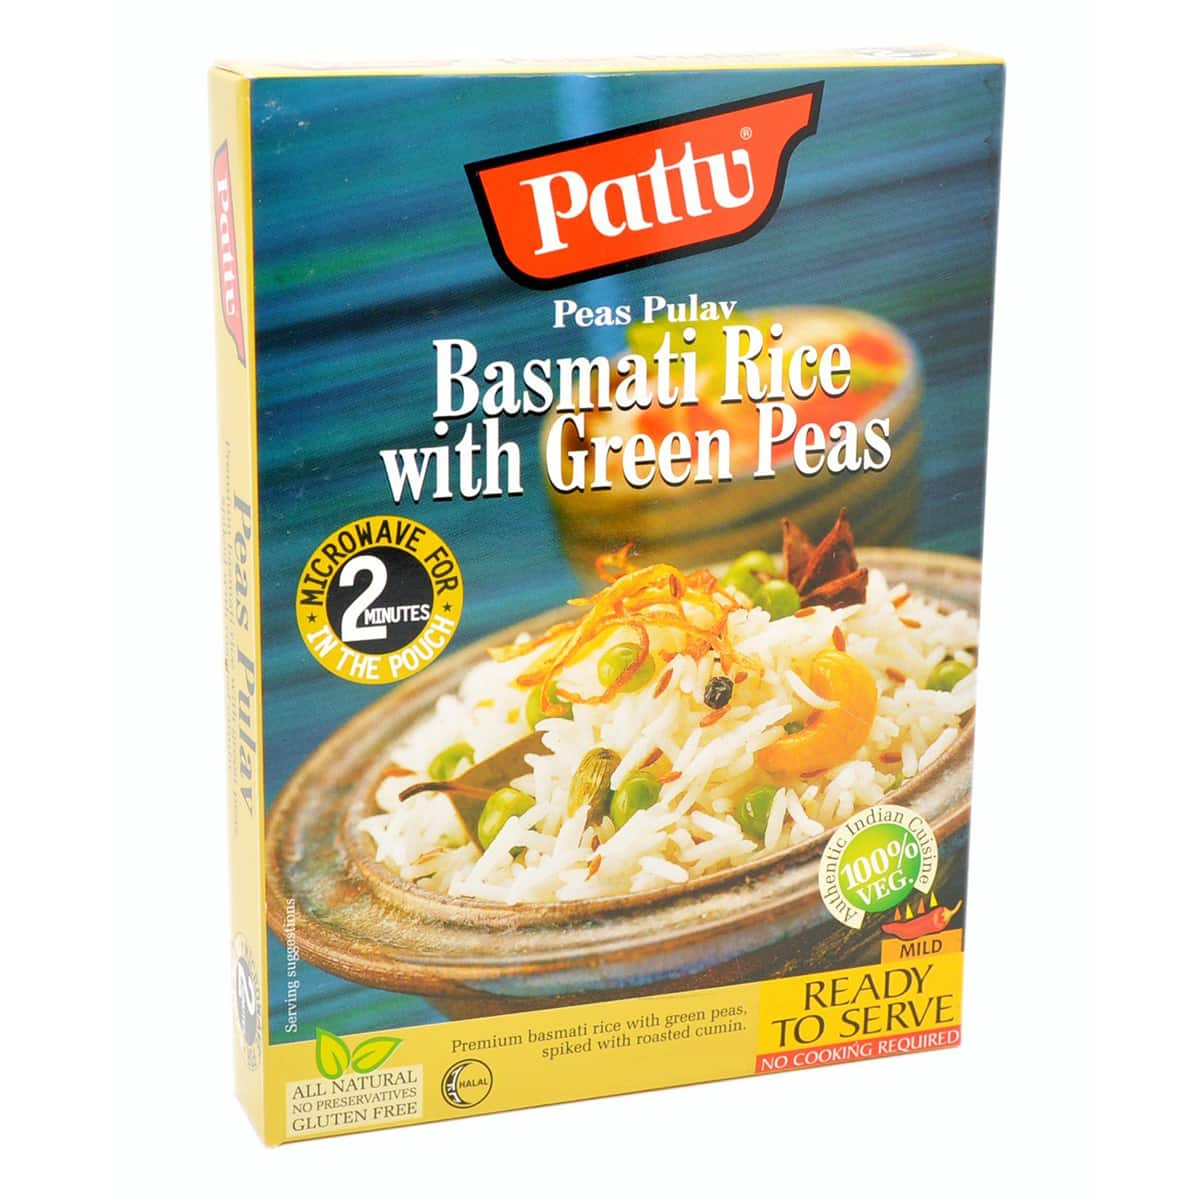 Buy Pattu Peas Pulav (Basmati Rice with Green Peas) Ready to Serve - 285 gm